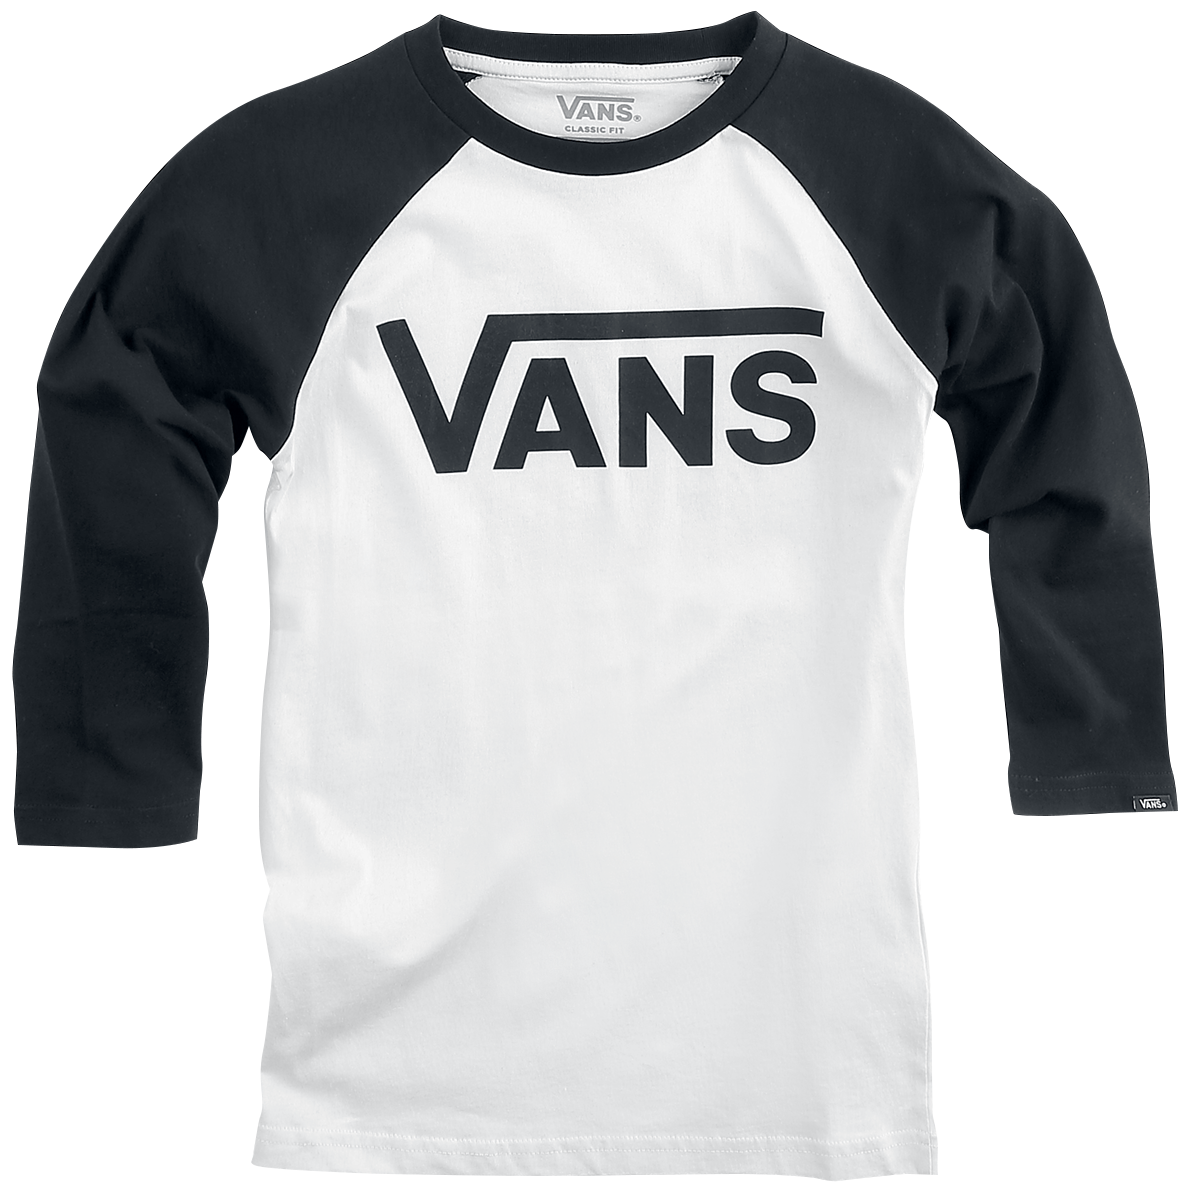 Vans Kids - BY VANS Classic Raglan - Langarmshirt - schwarz| weiß